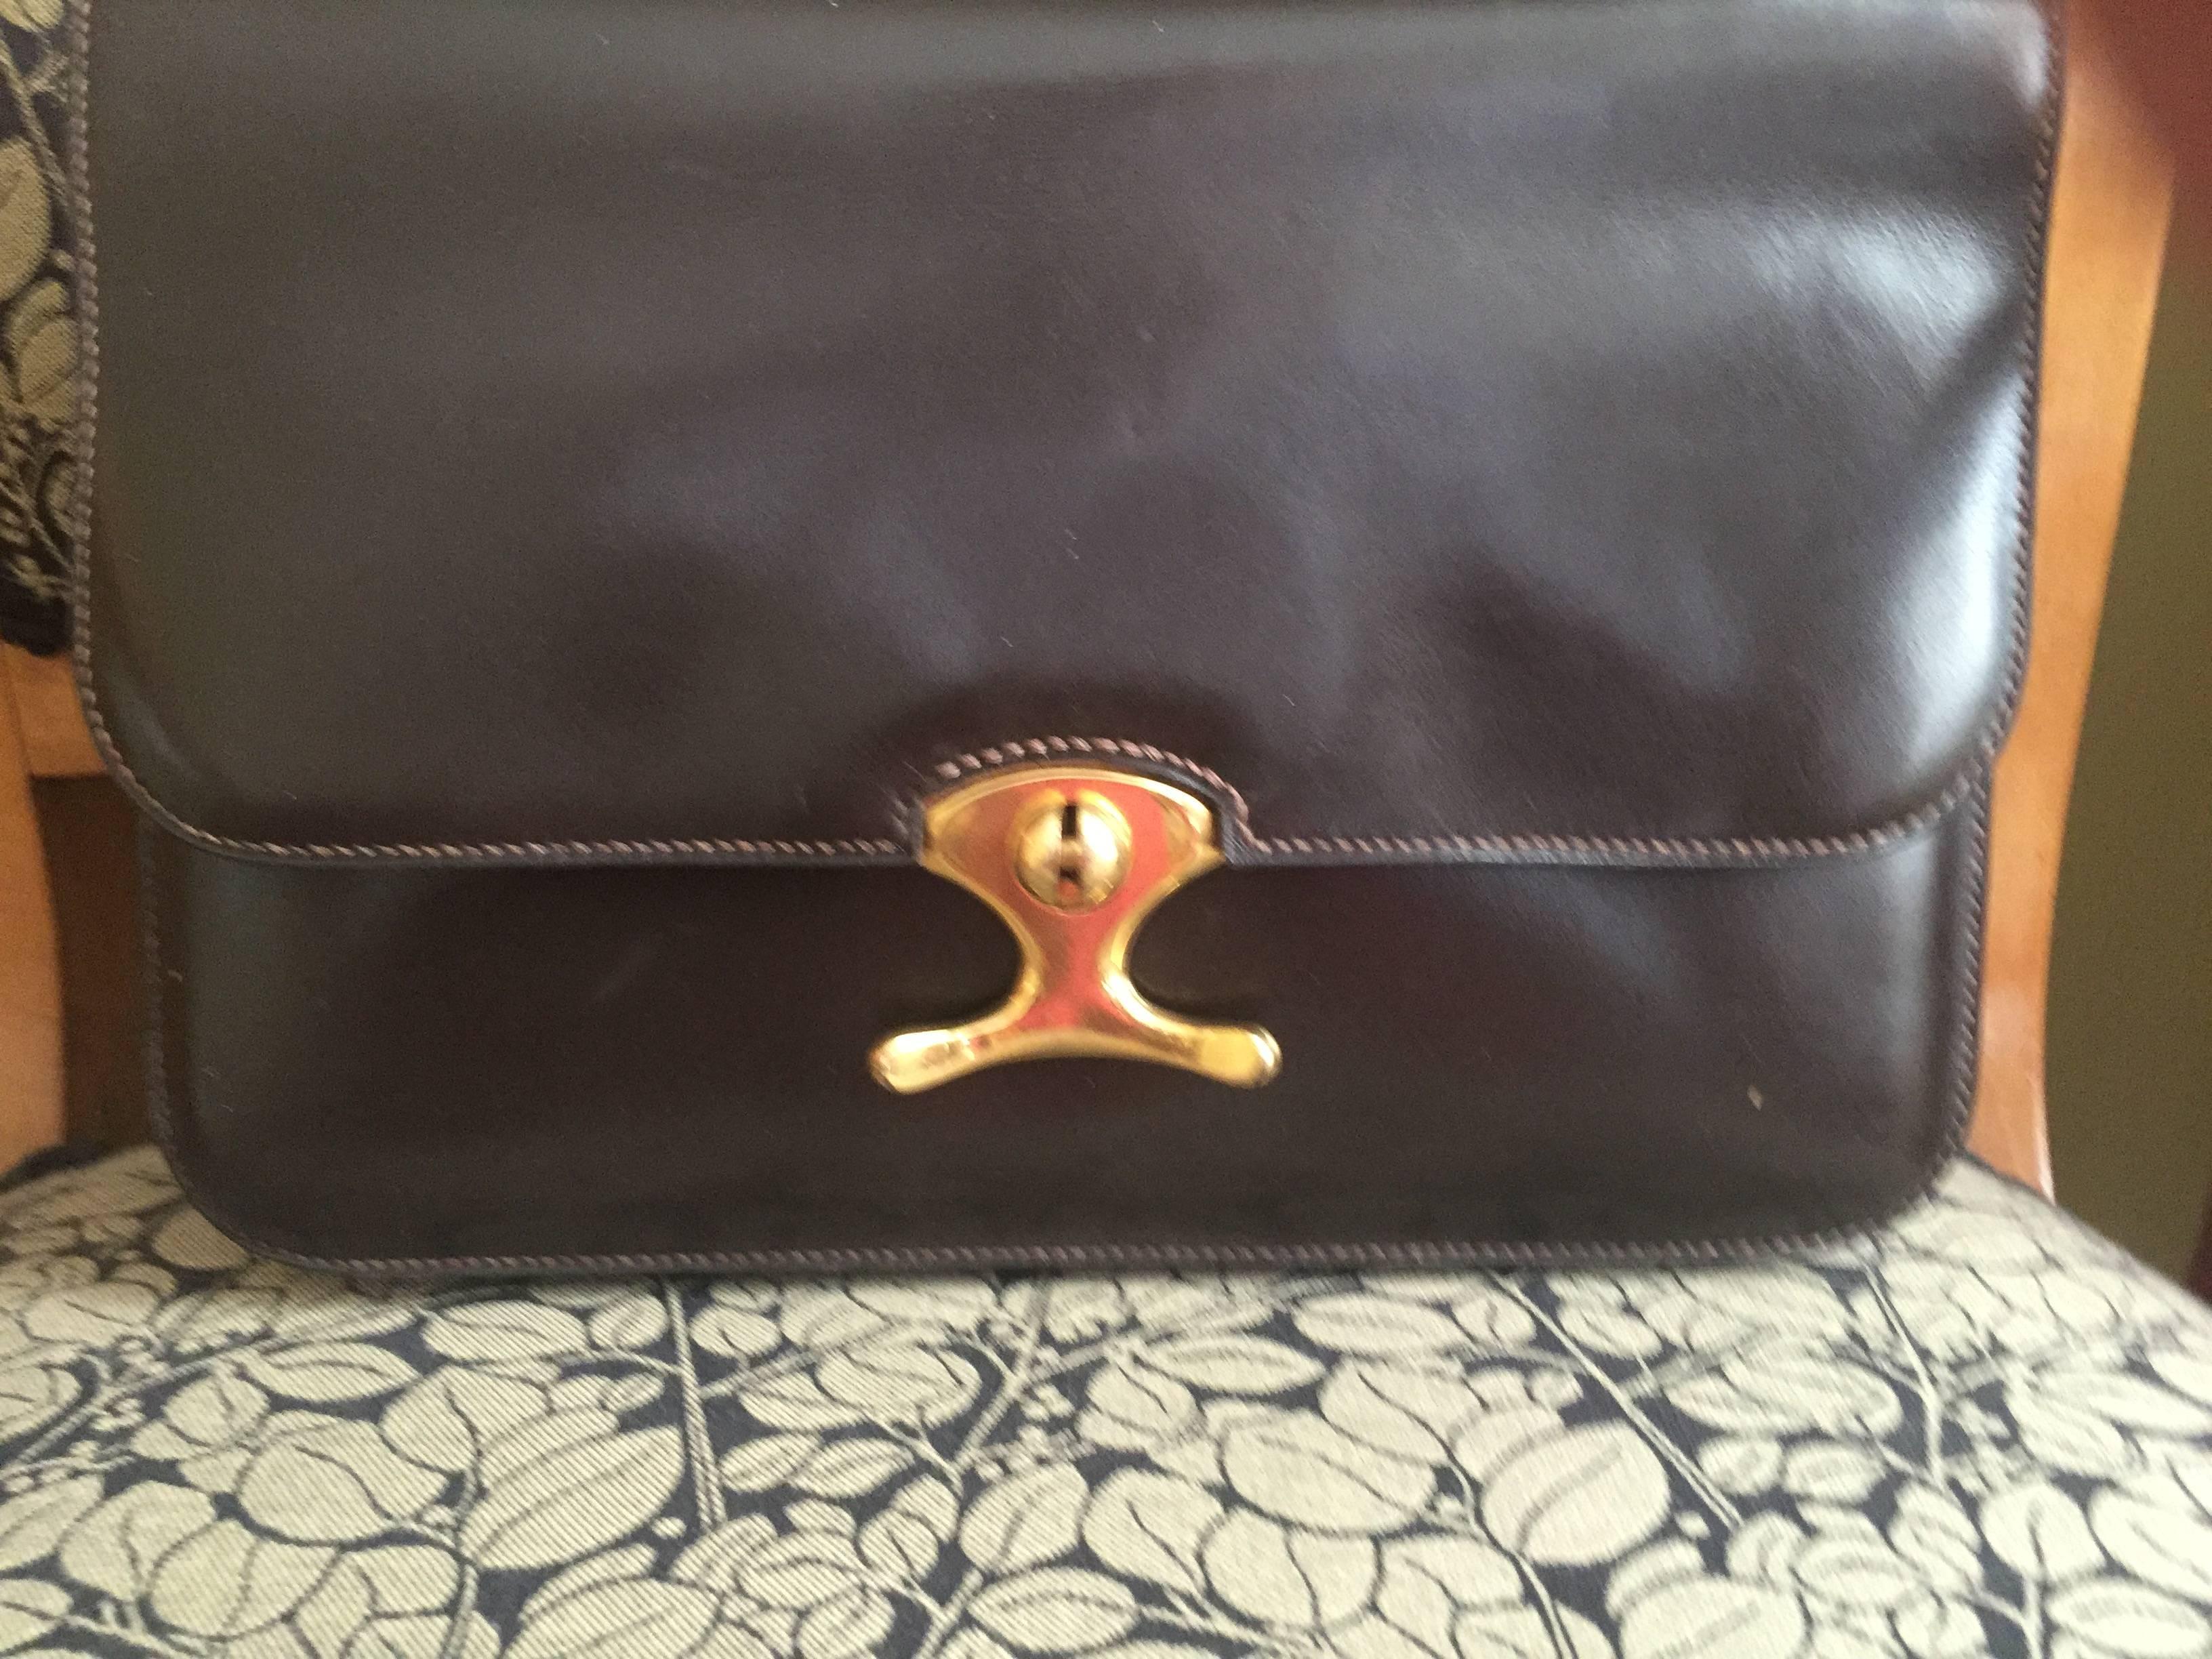 Hermes black leather handbag. 
Details to follow.